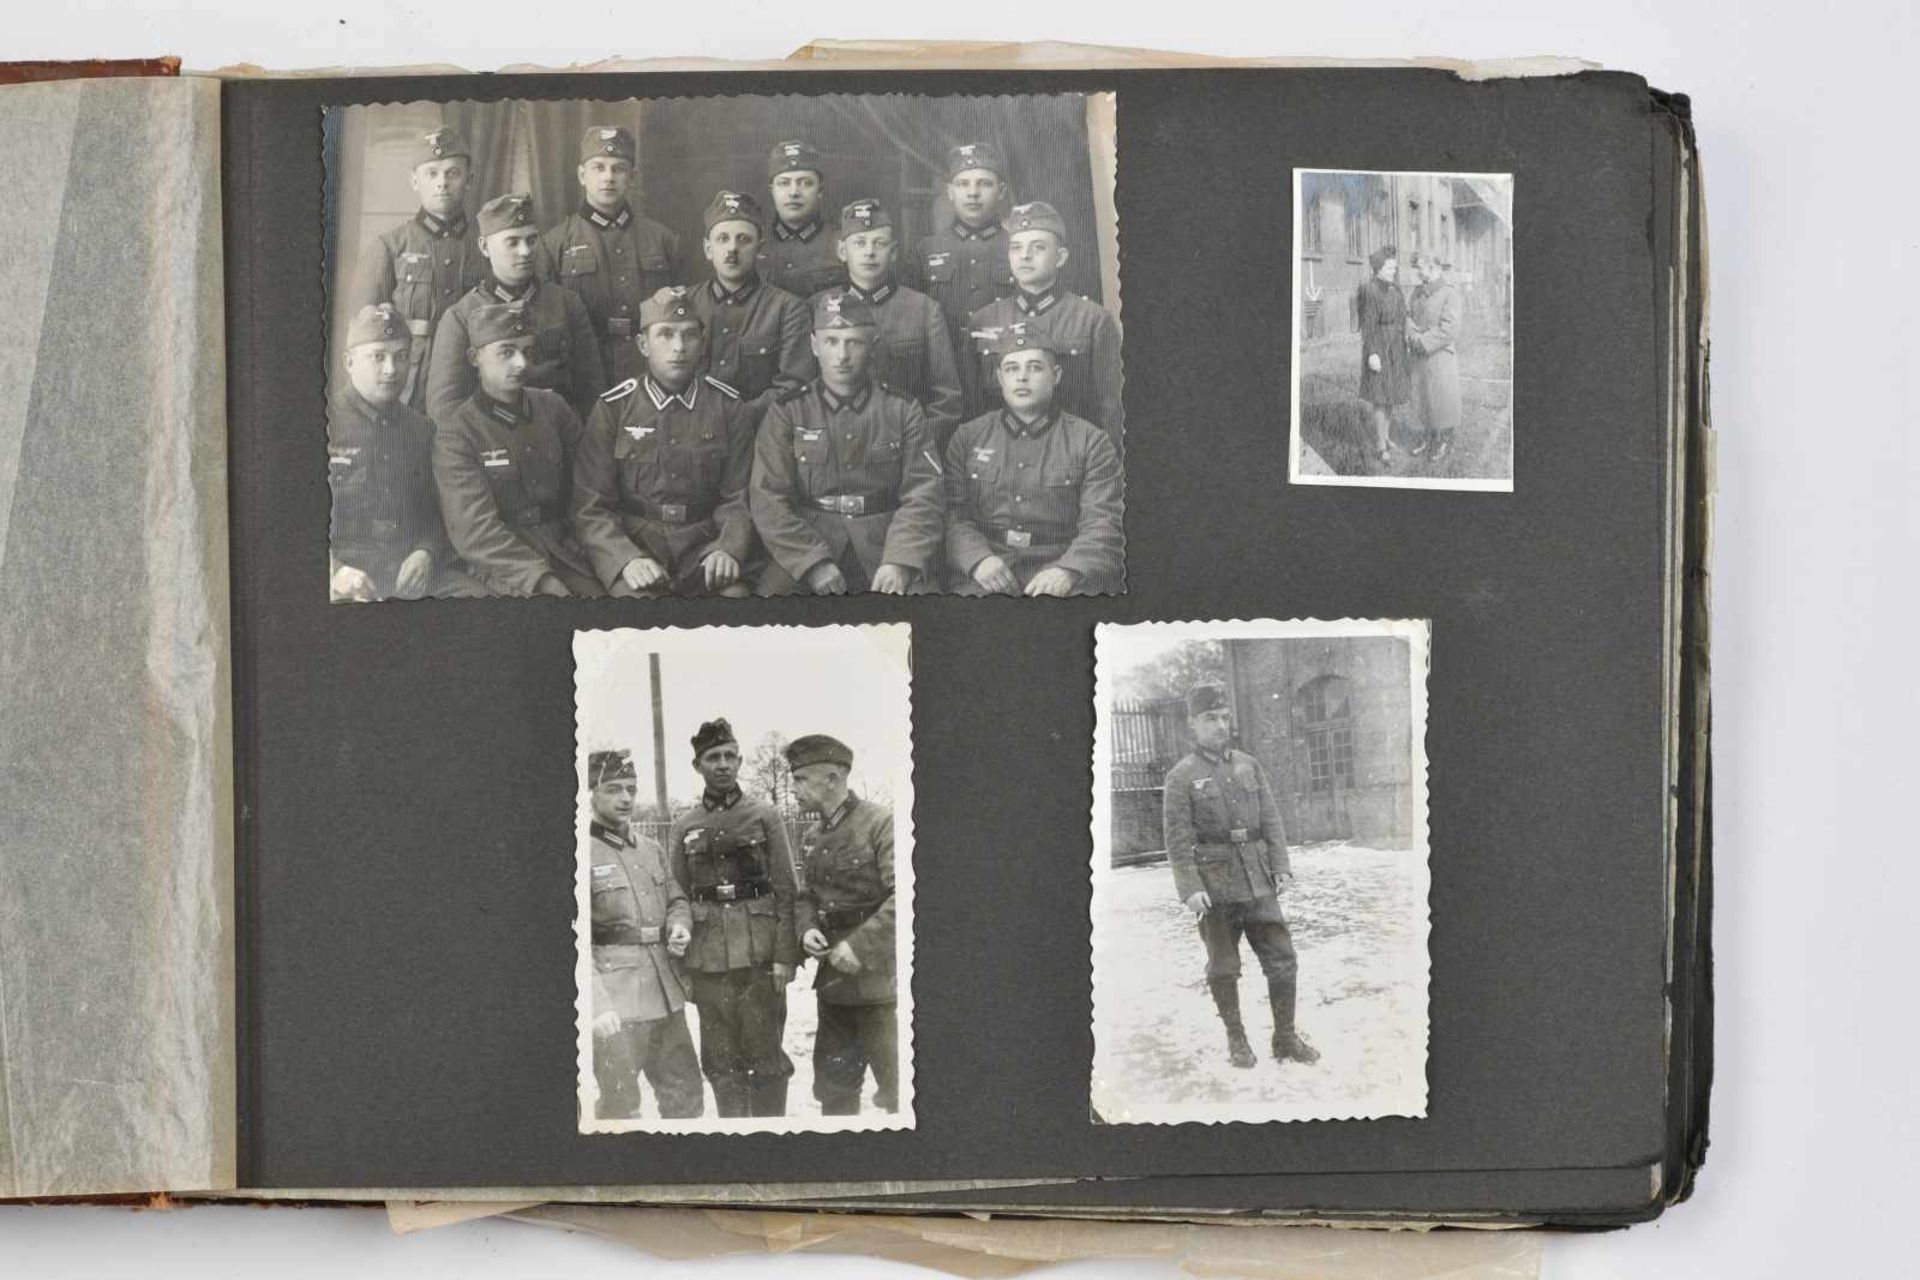 Album photos de la Heer. Couverture en carton marron, marquée en relief « Kriegserinnerungen ». - Image 3 of 4